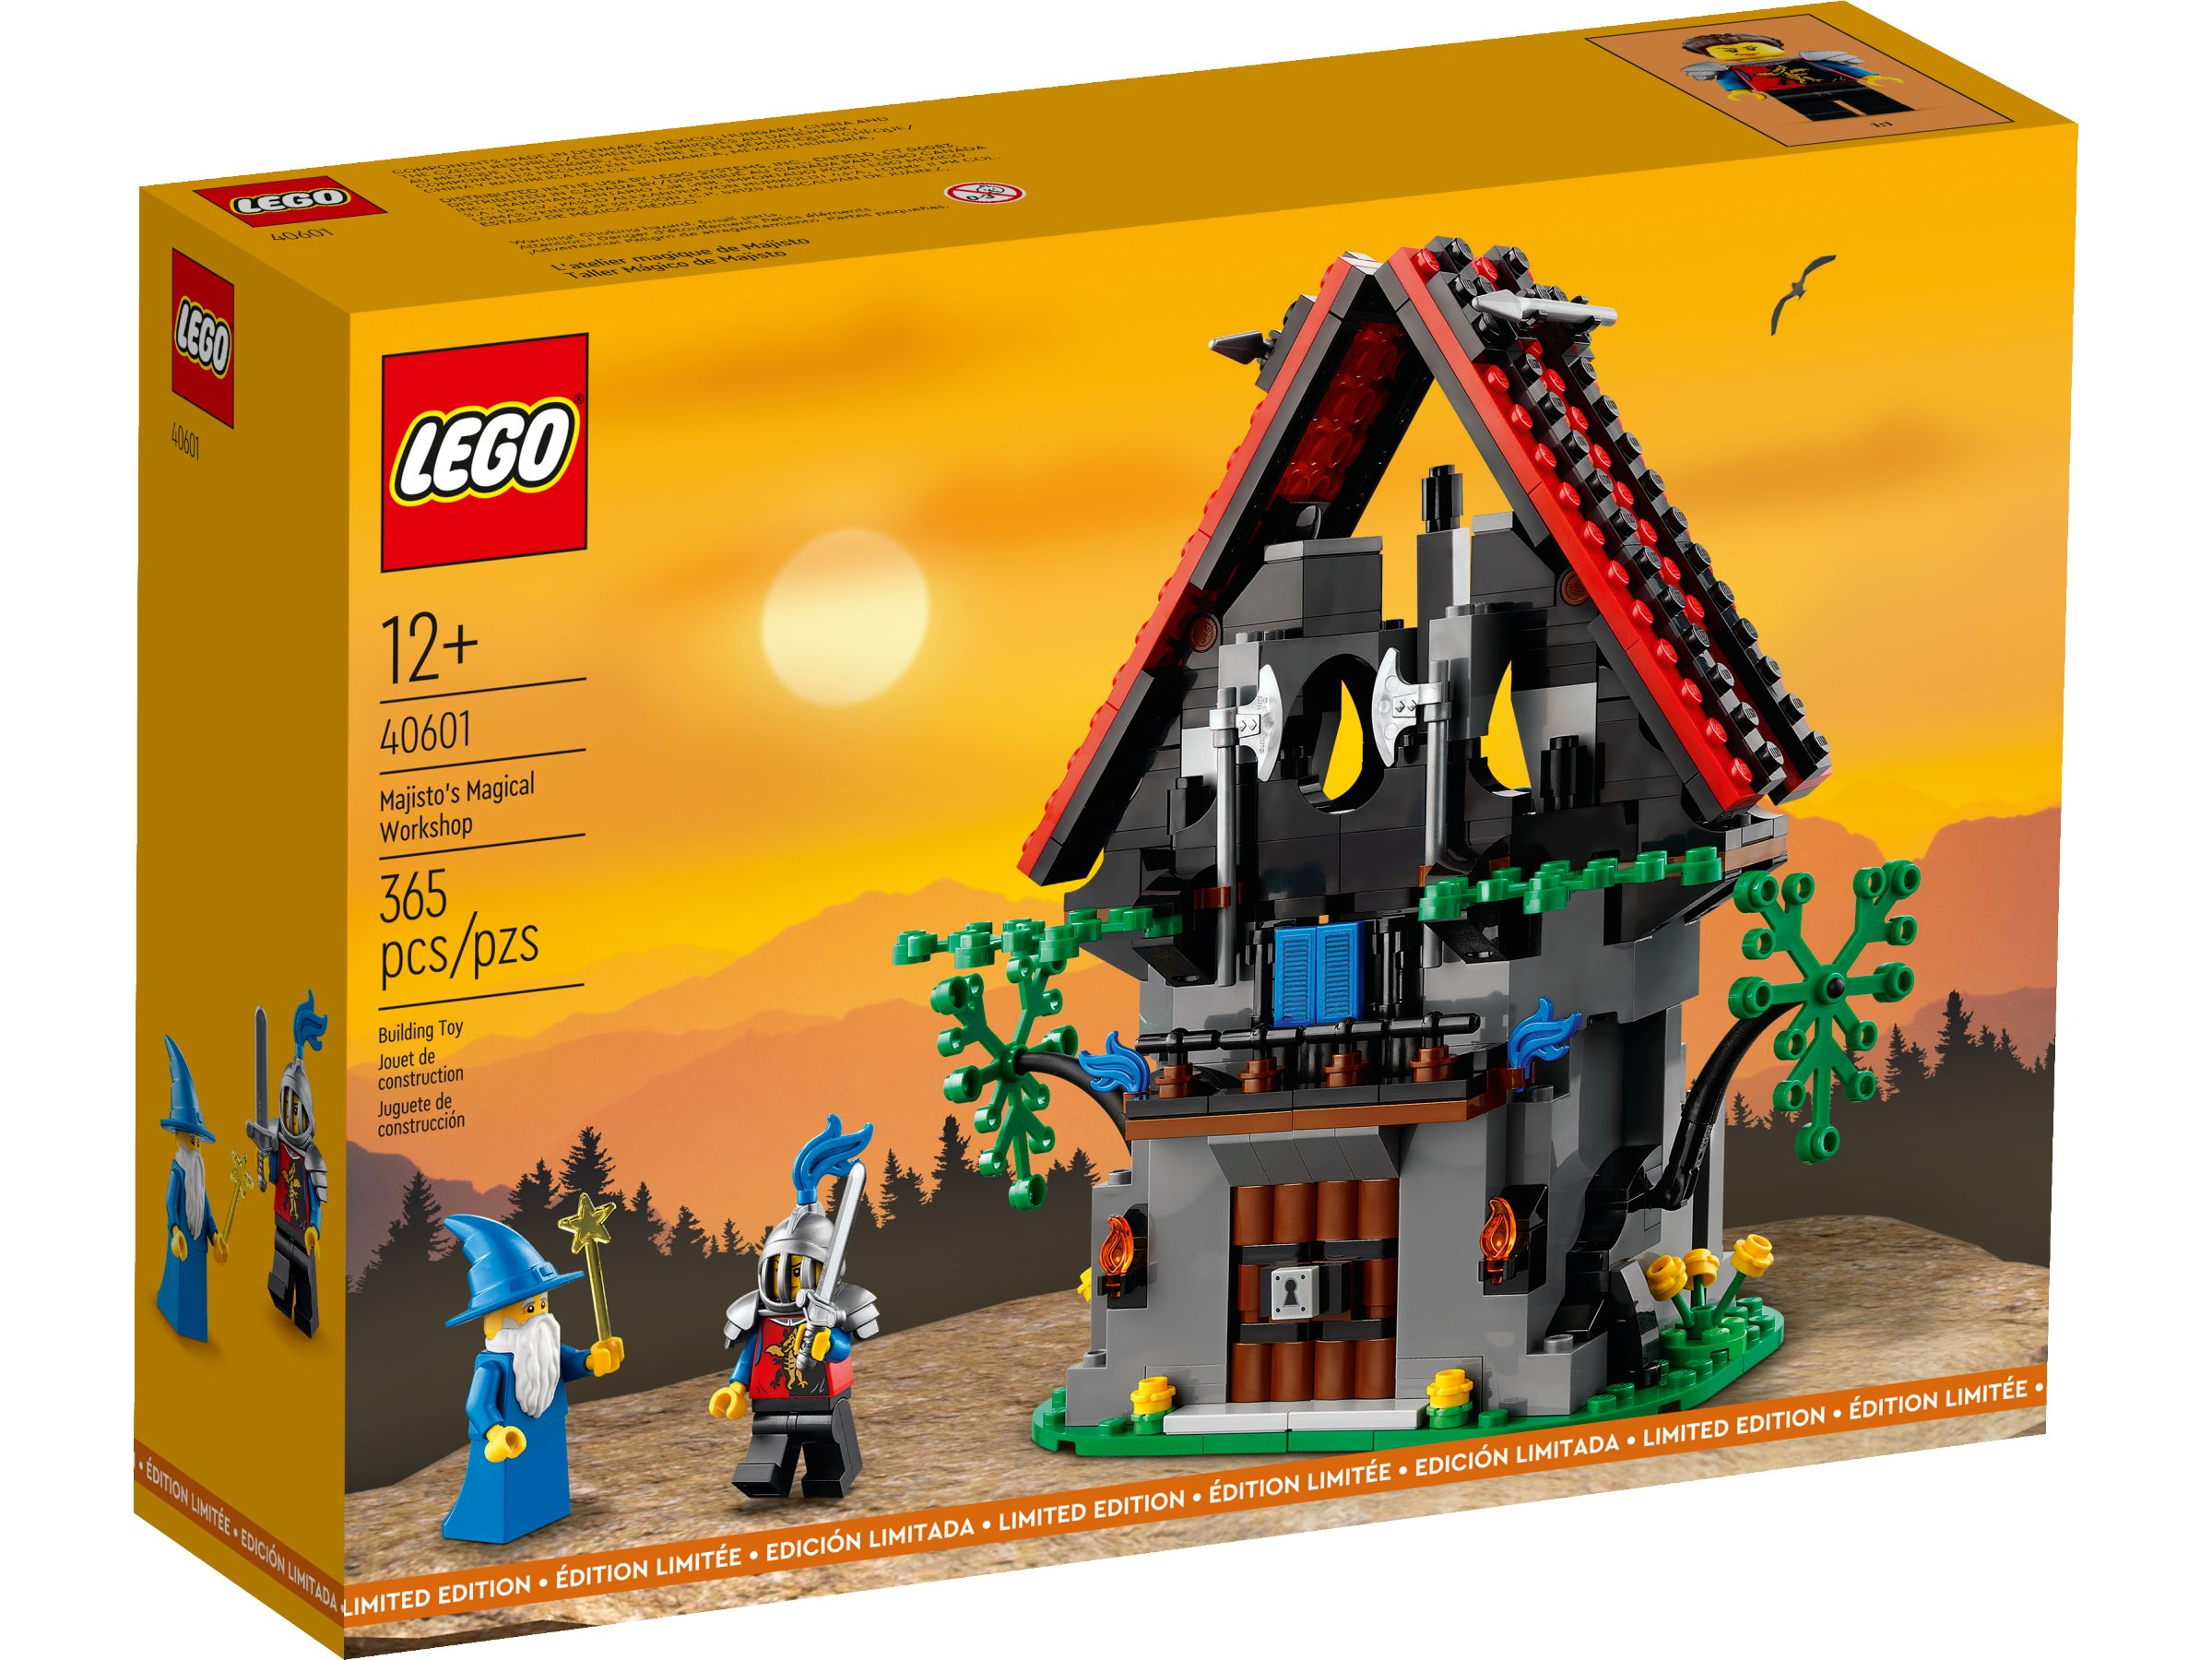 LEGO 40601 Zauberwerkstatt Majistos Bausatz